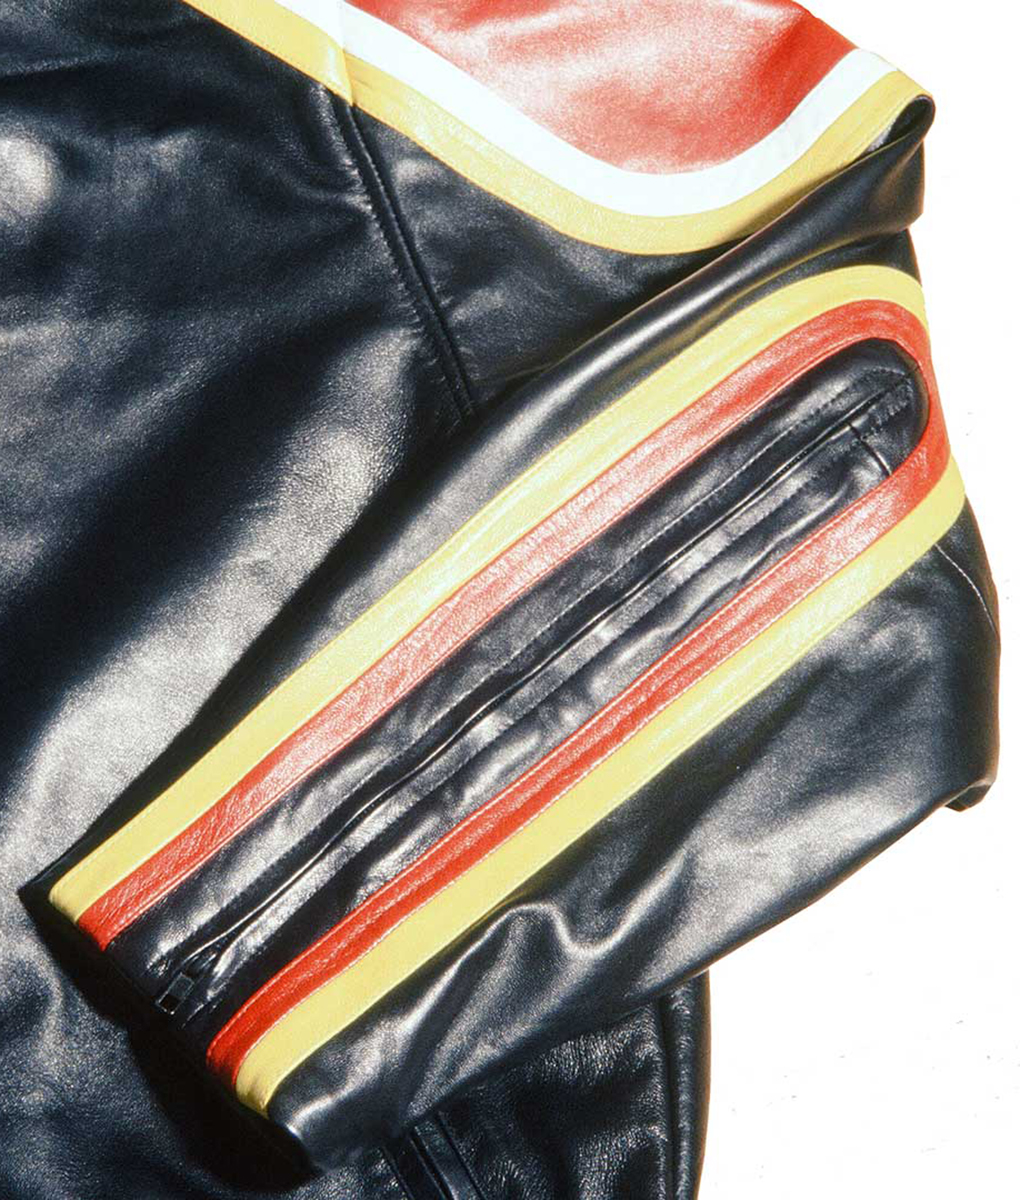 Roc a Fella Records Black Leather Jacket (4)